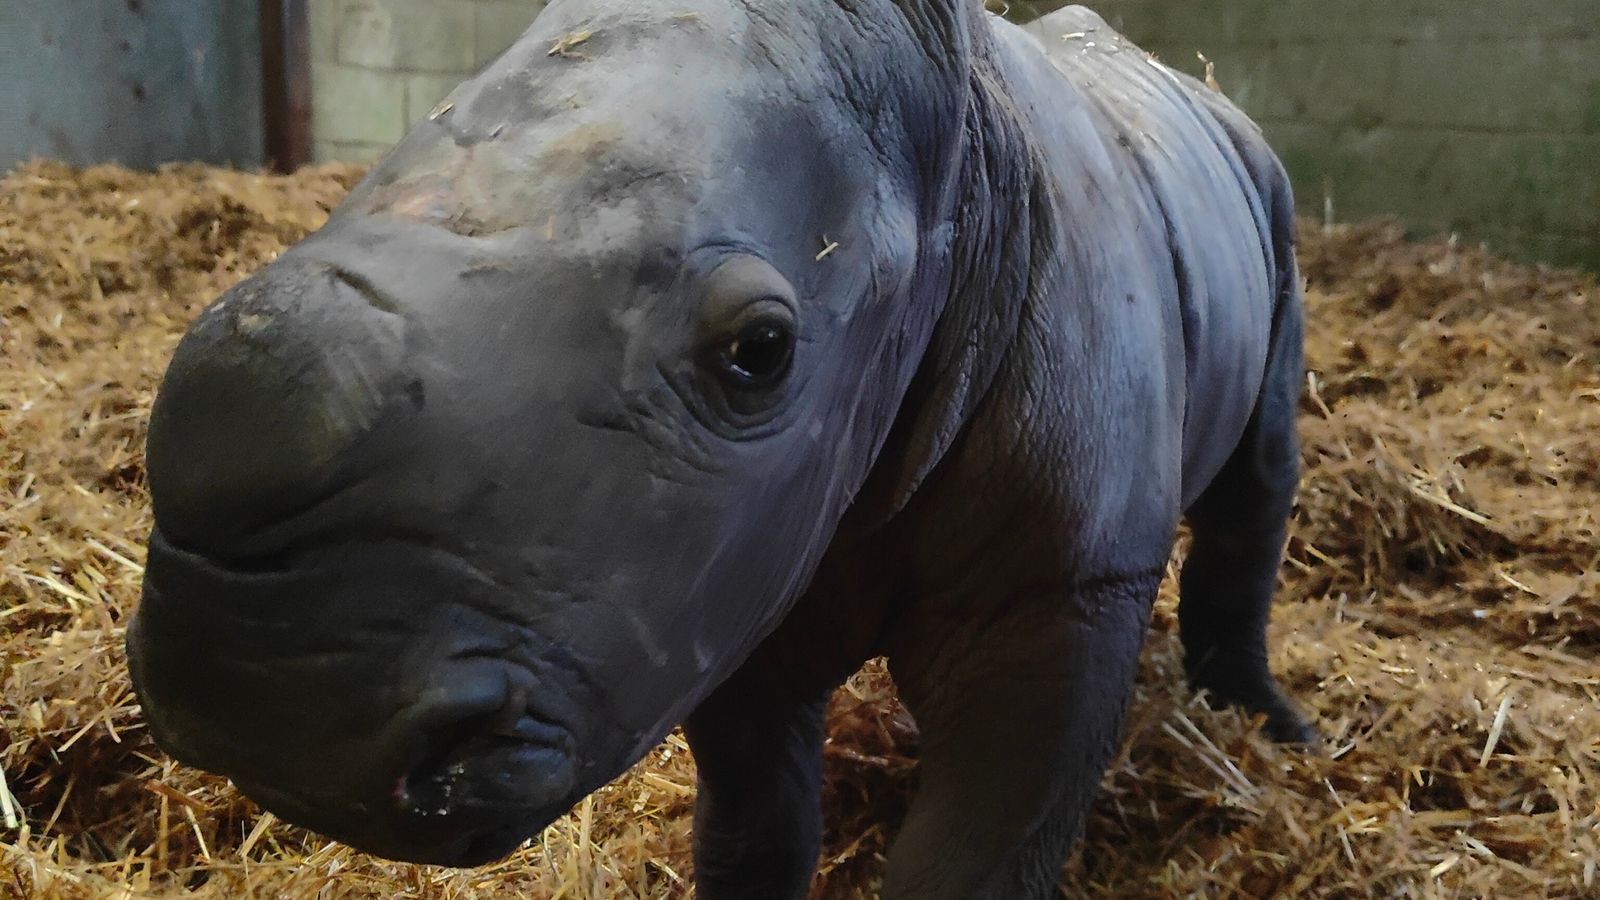 'Little miracle': Zoo celebrates birth of rare white rhino ...